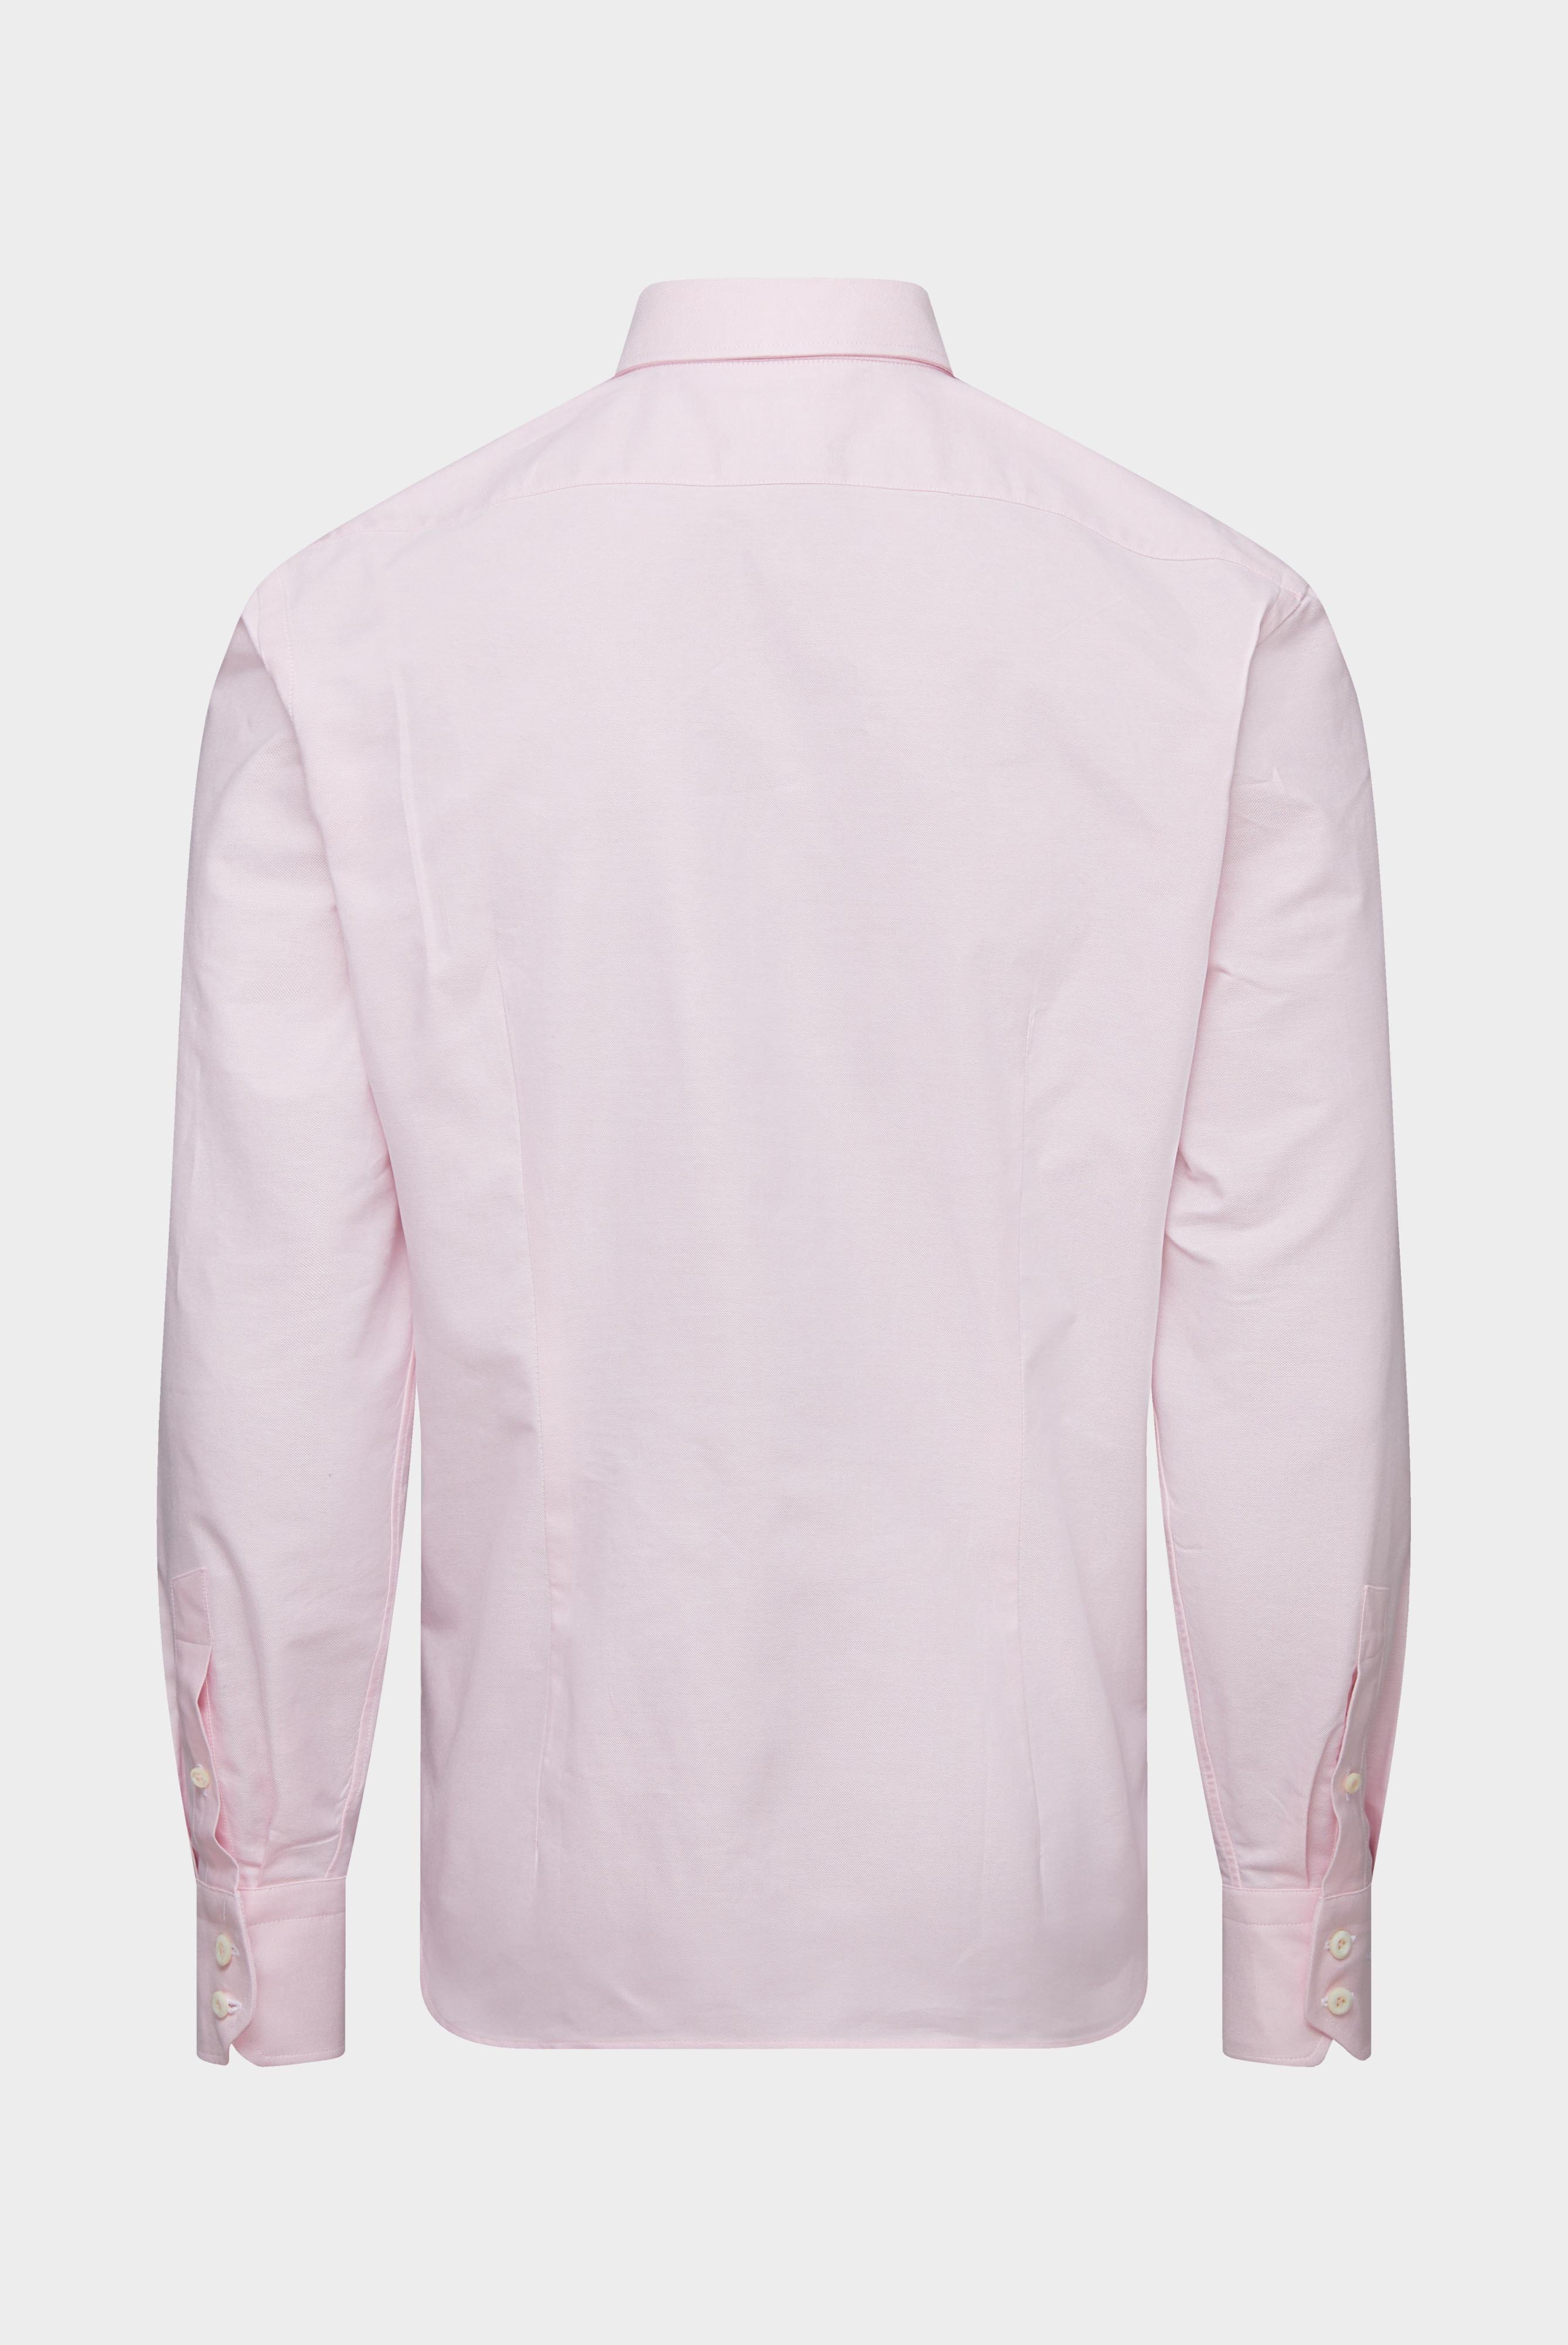 Casual Shirts+Oxford Shirt Tailor Fit+20.2013.AV.161267.530.37